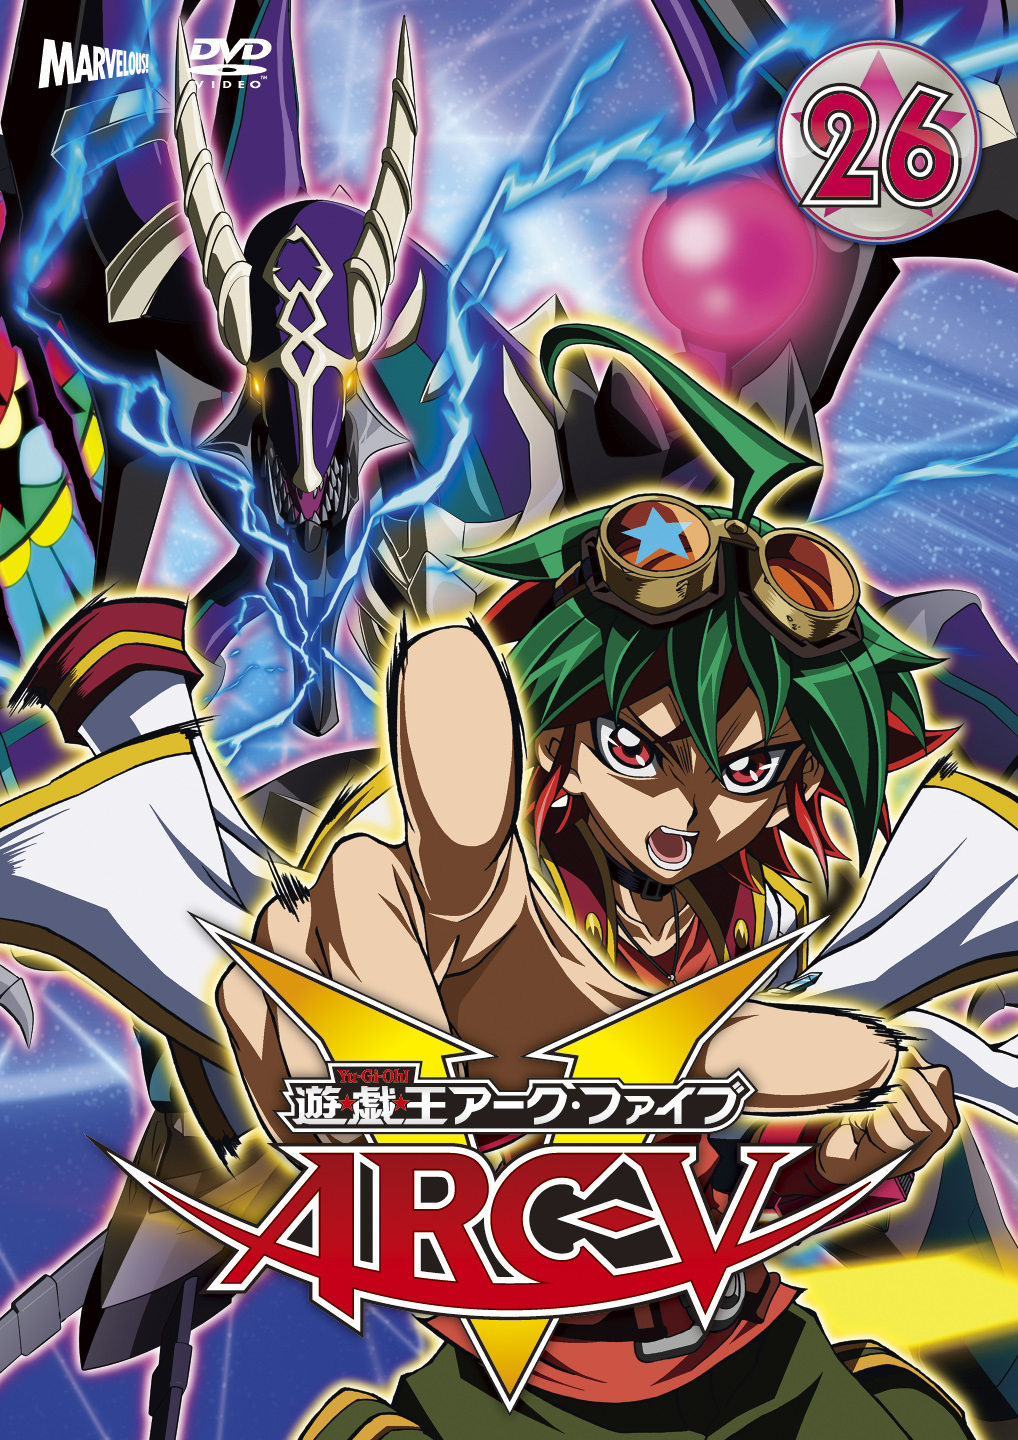 DVD 遊☆戯☆王ARC-V 全37巻セット レンタル版 遊戯王アーク